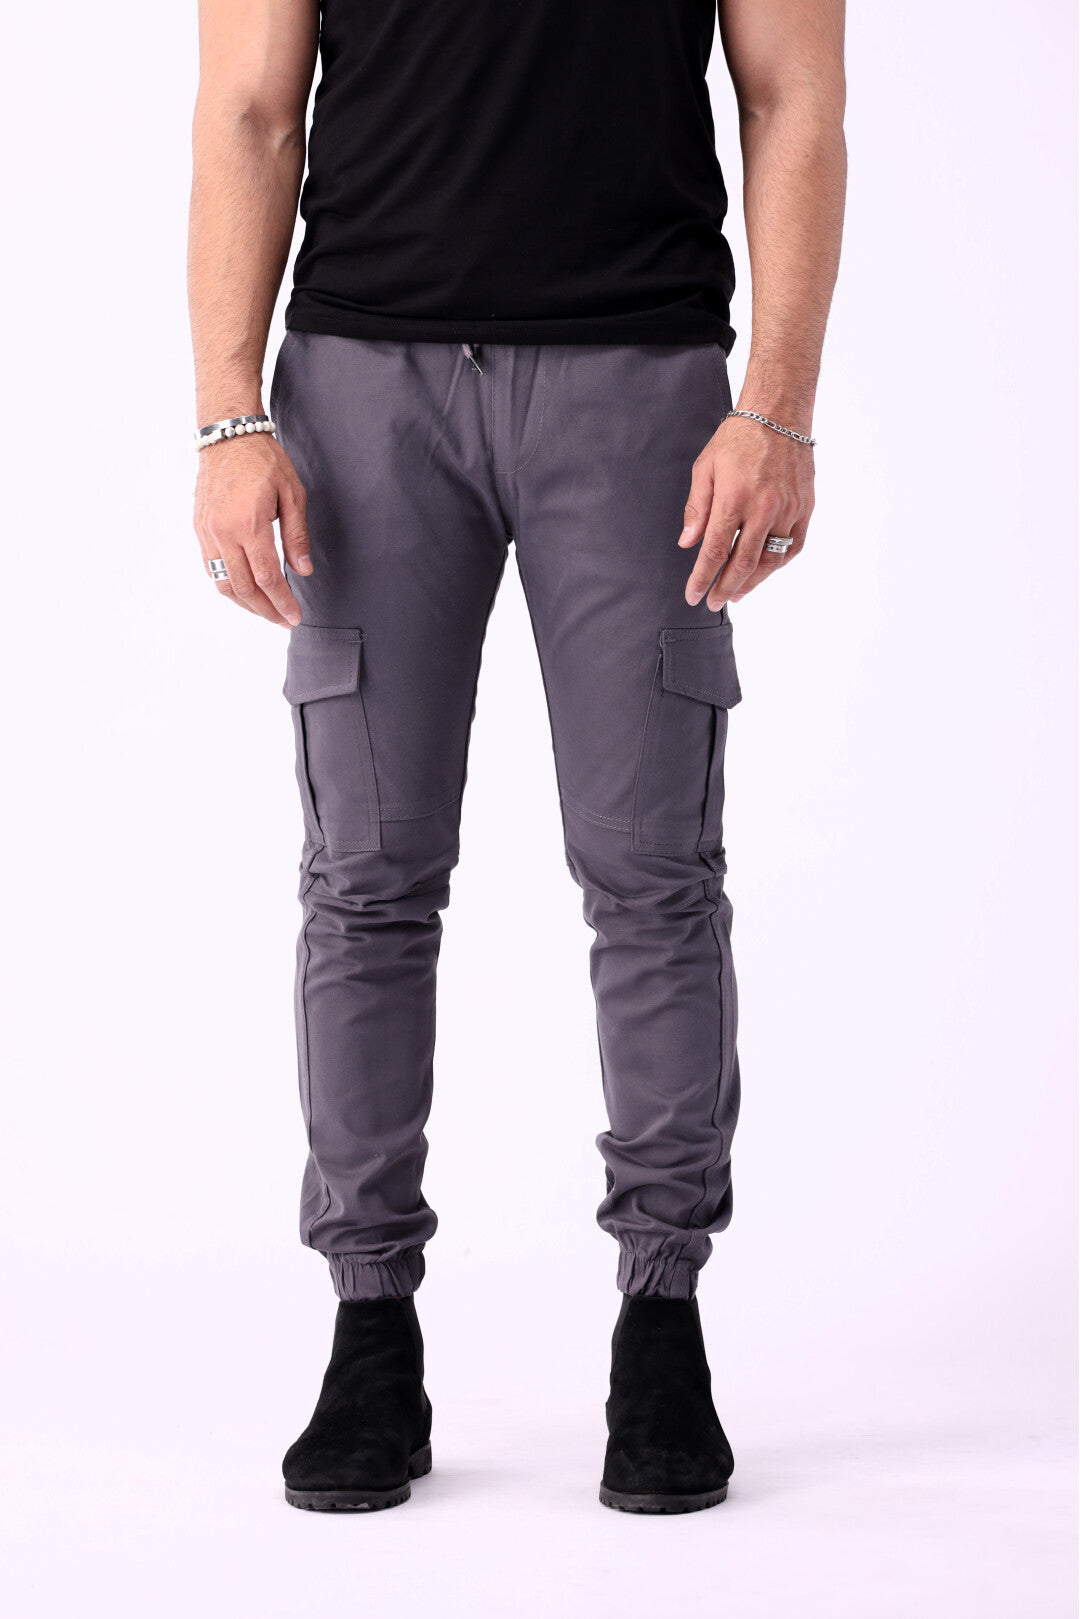 Cargo Six Pocket Trousers for Men - Grey 6 Pocket Cargo Pant